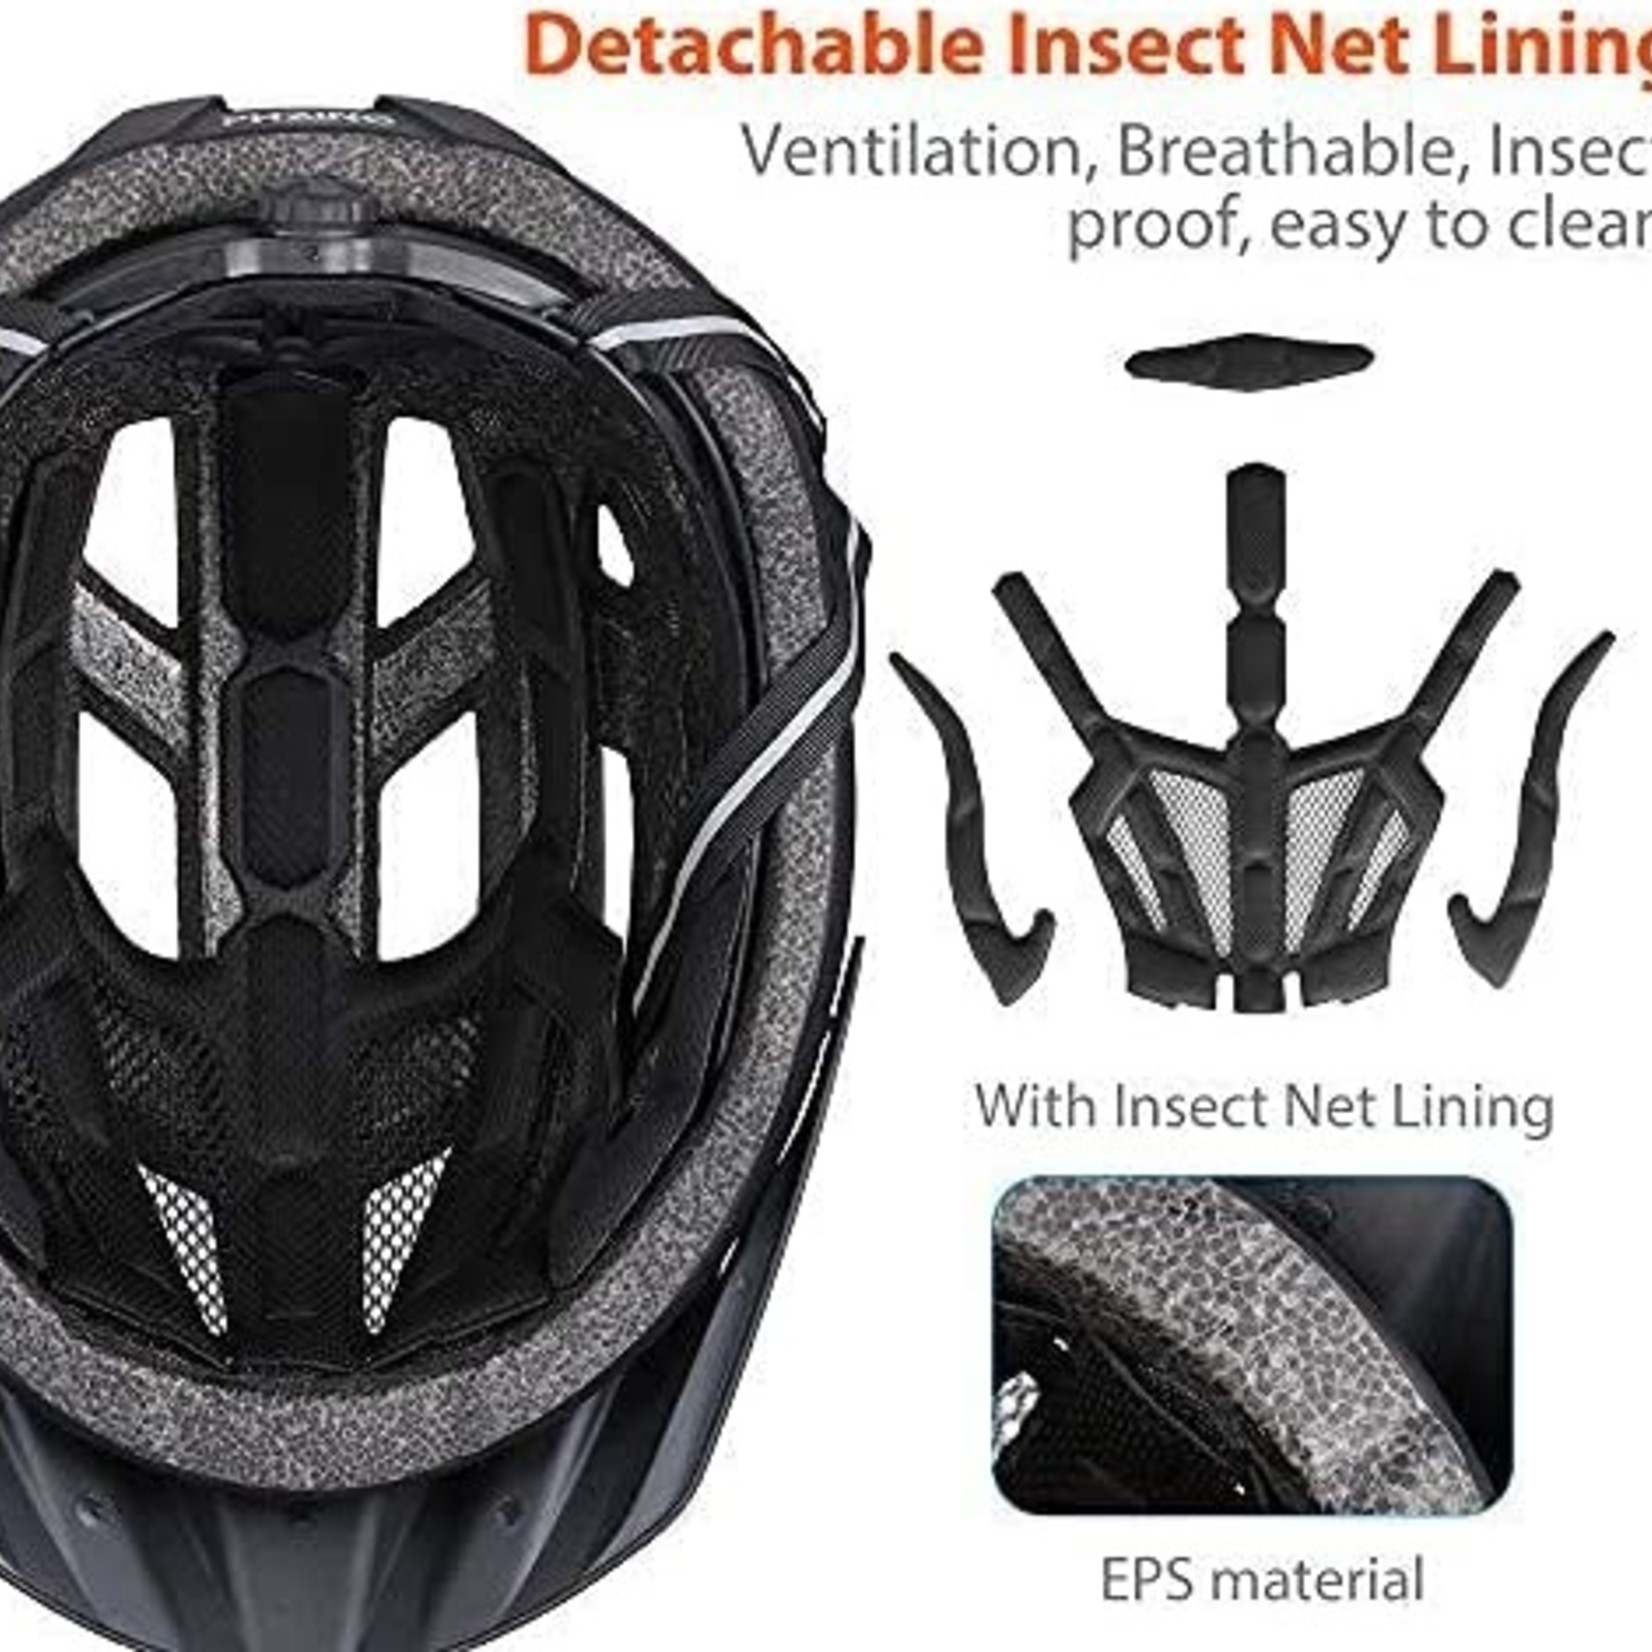 PHZ. Bike Helmet with Light-Adult-Black